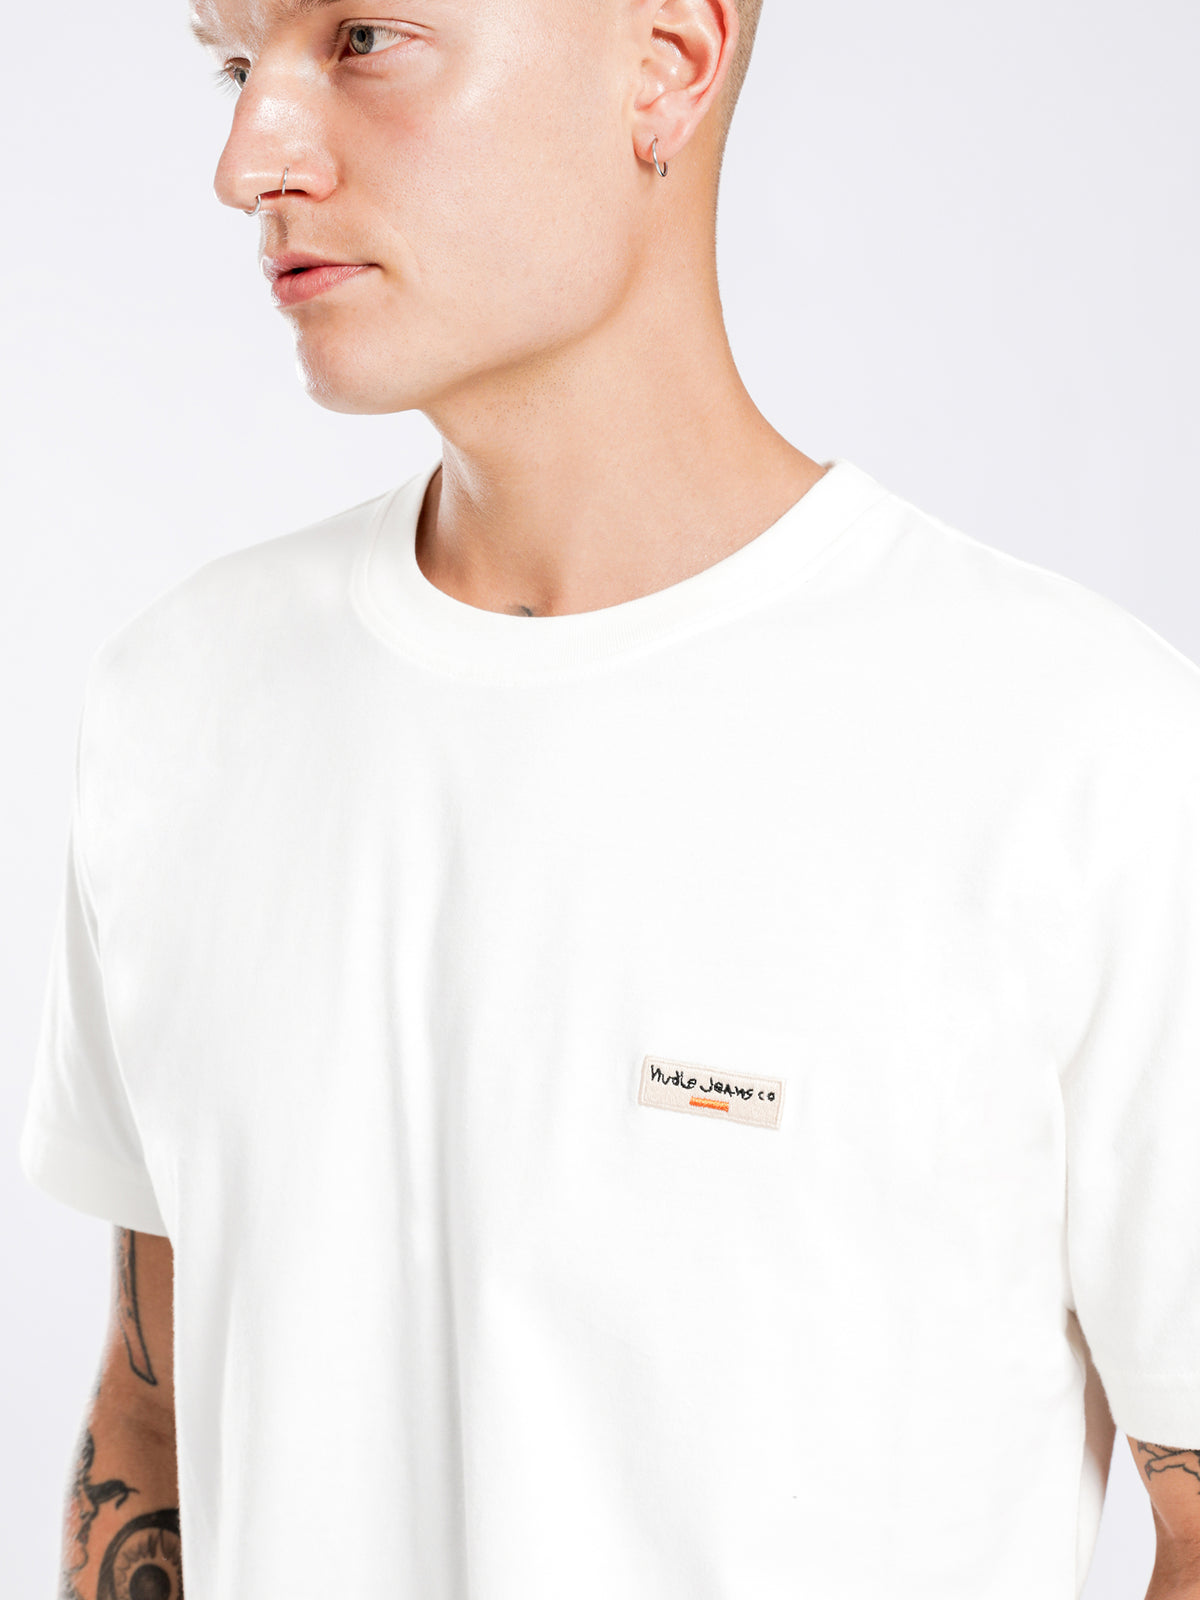 Daniel Logo T-Shirt in Off White